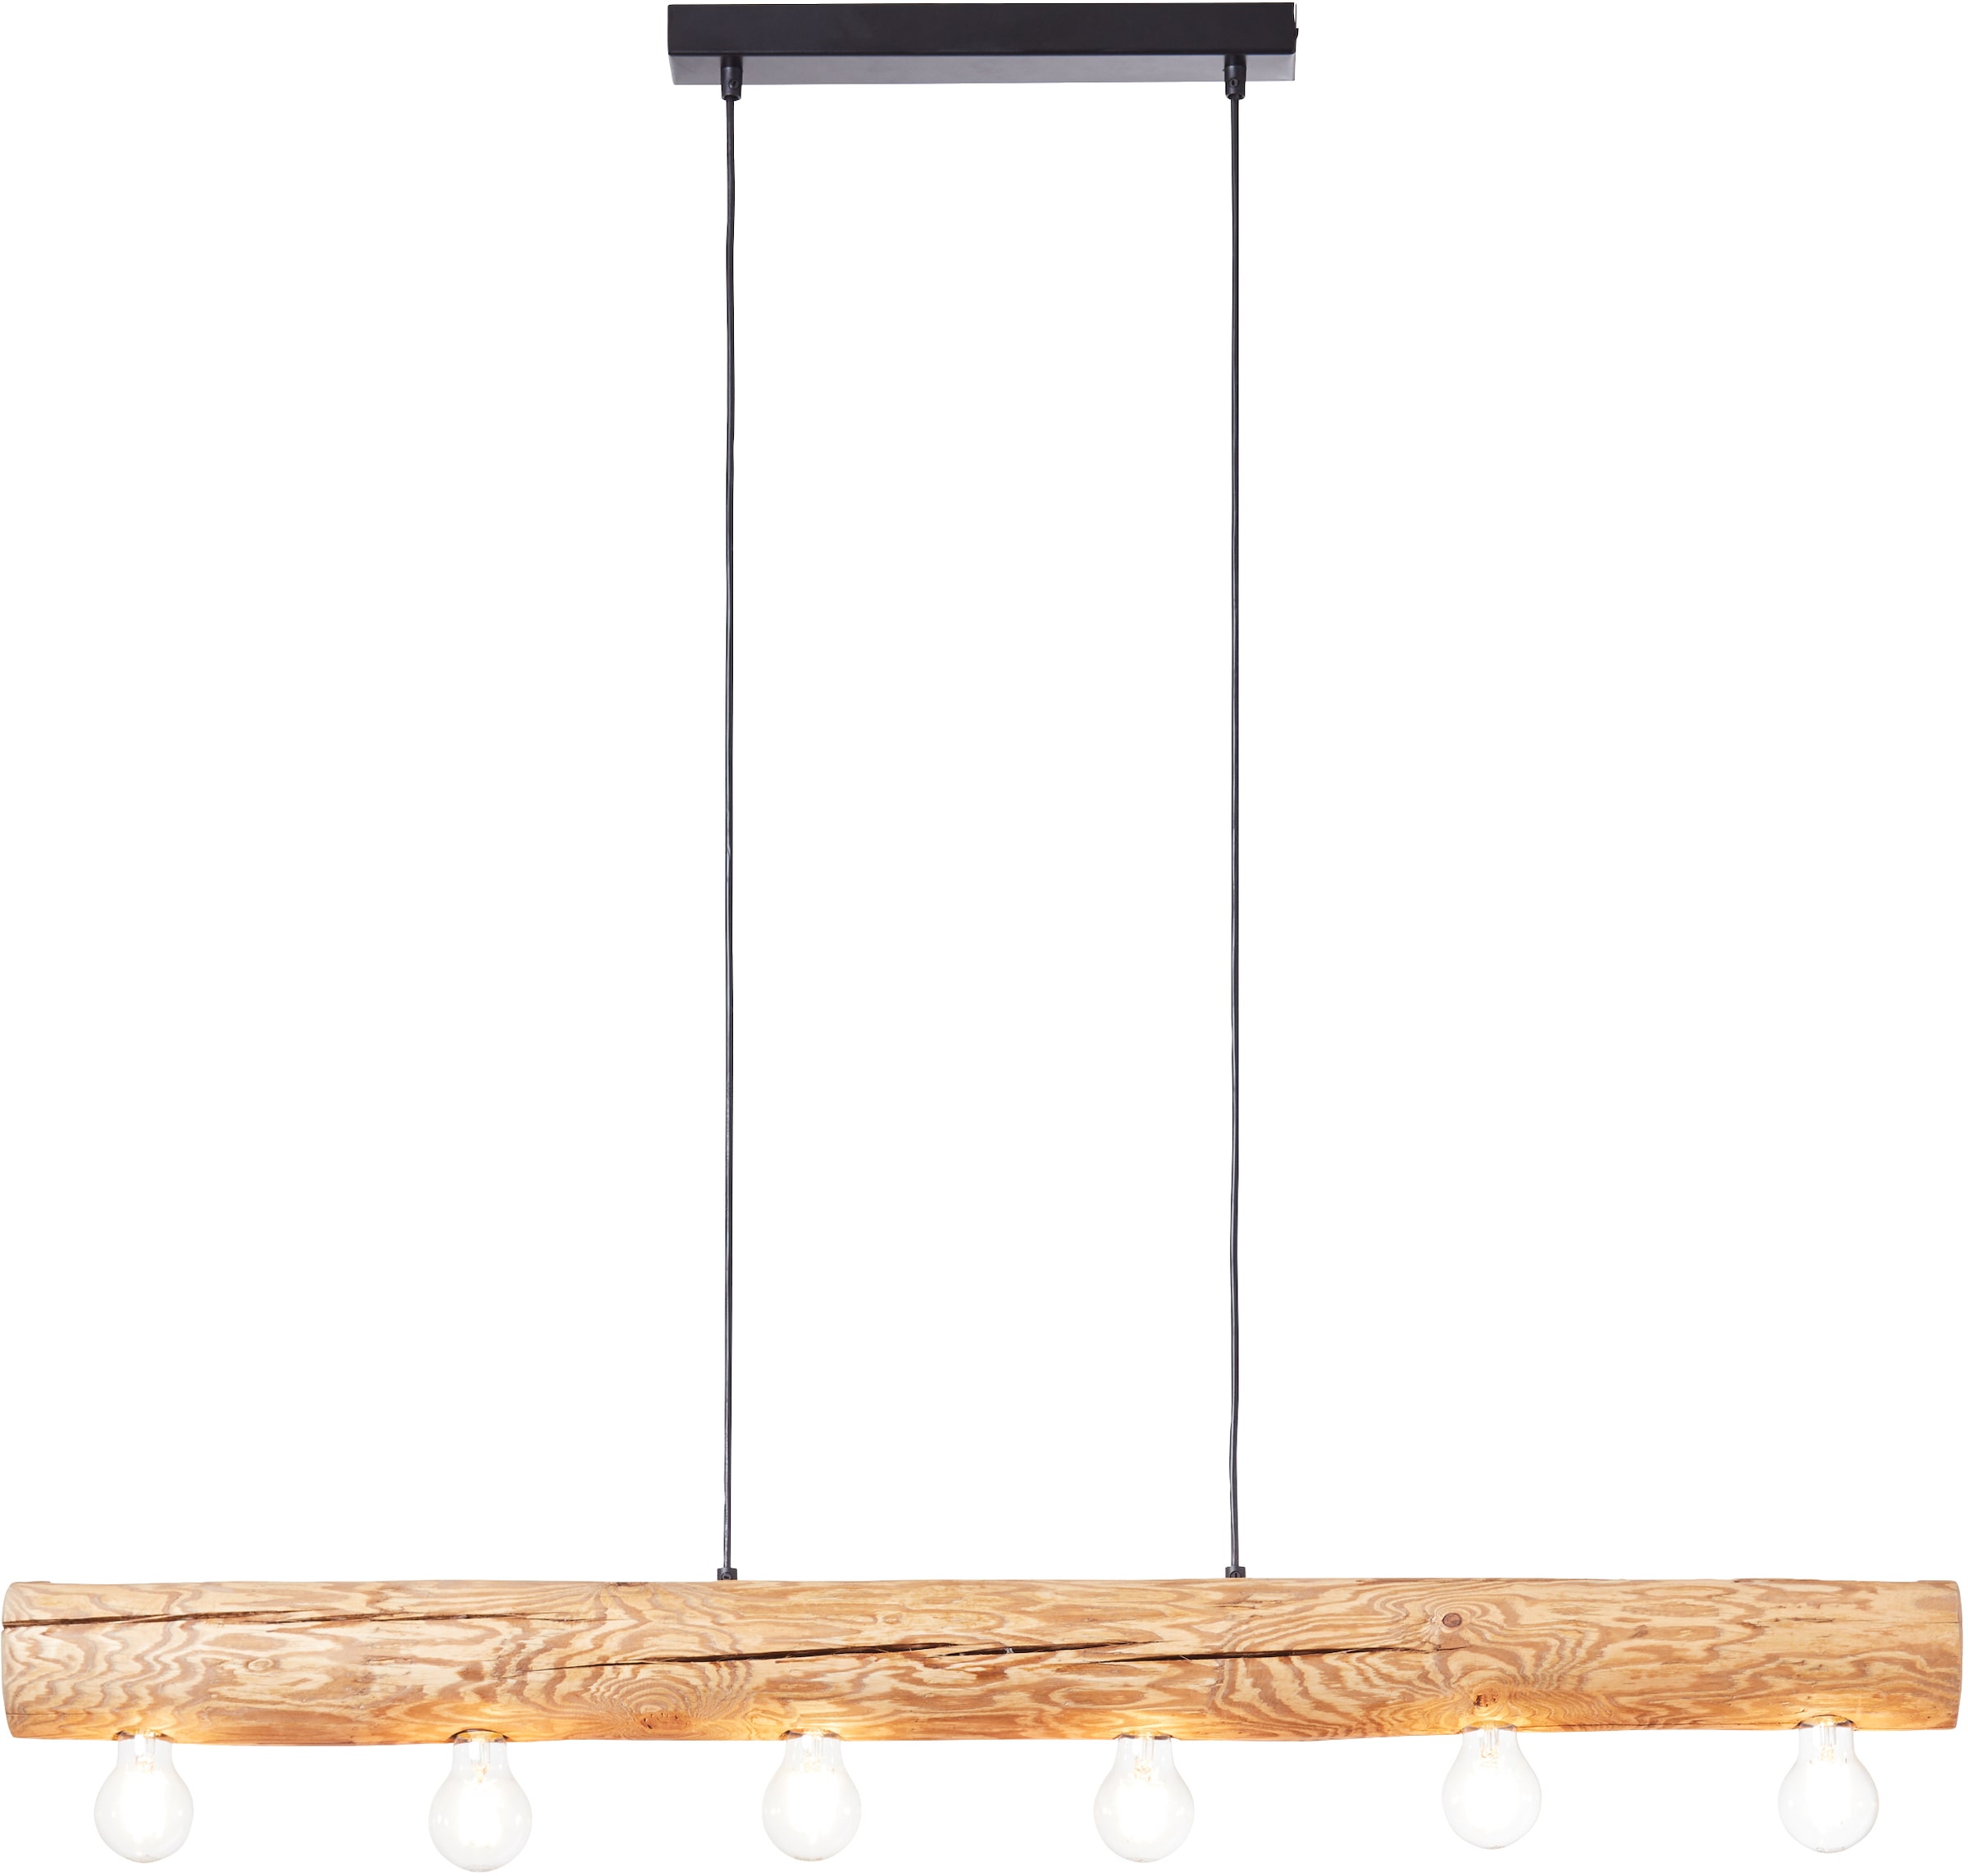 Brilliant Pendelleuchte »Trabo«, 6 flammig-flammig, 105cm Höhe, 115cm Breite, 6x E27, kürzbar, Holz/Metall, kiefer gebeizt